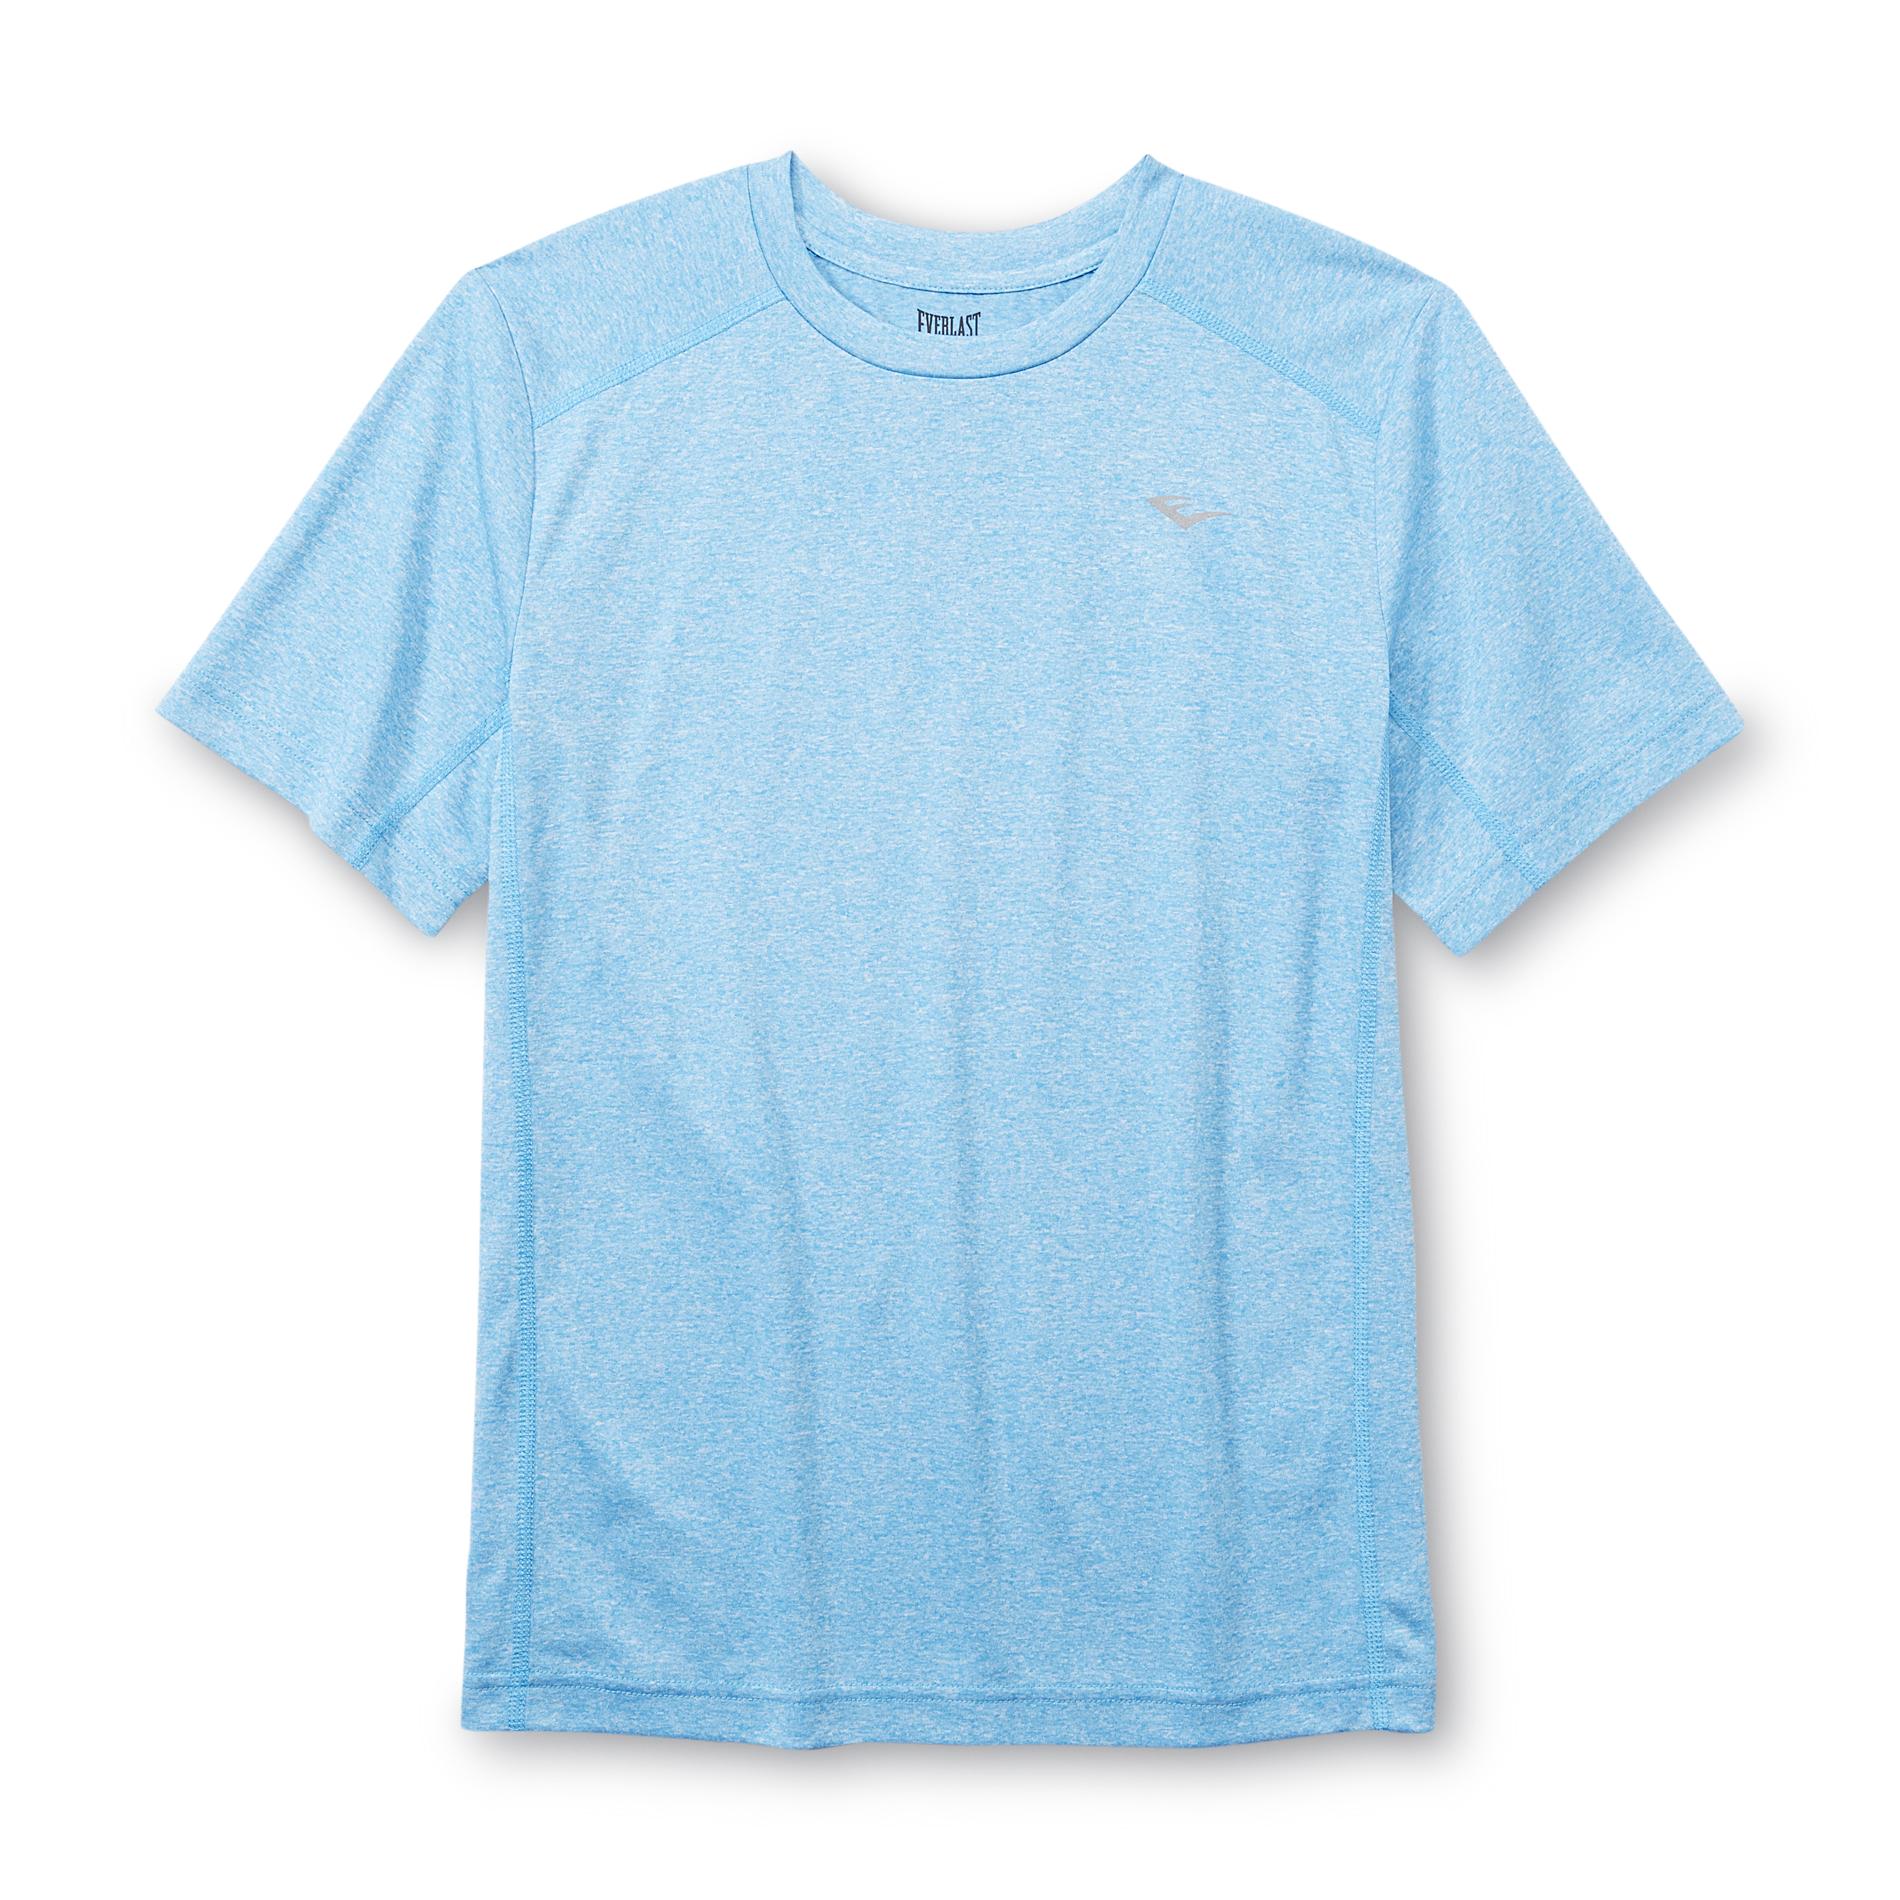 Everlast&reg; Boy's Yarn-Dyed Athletic T-Shirt - Heathered